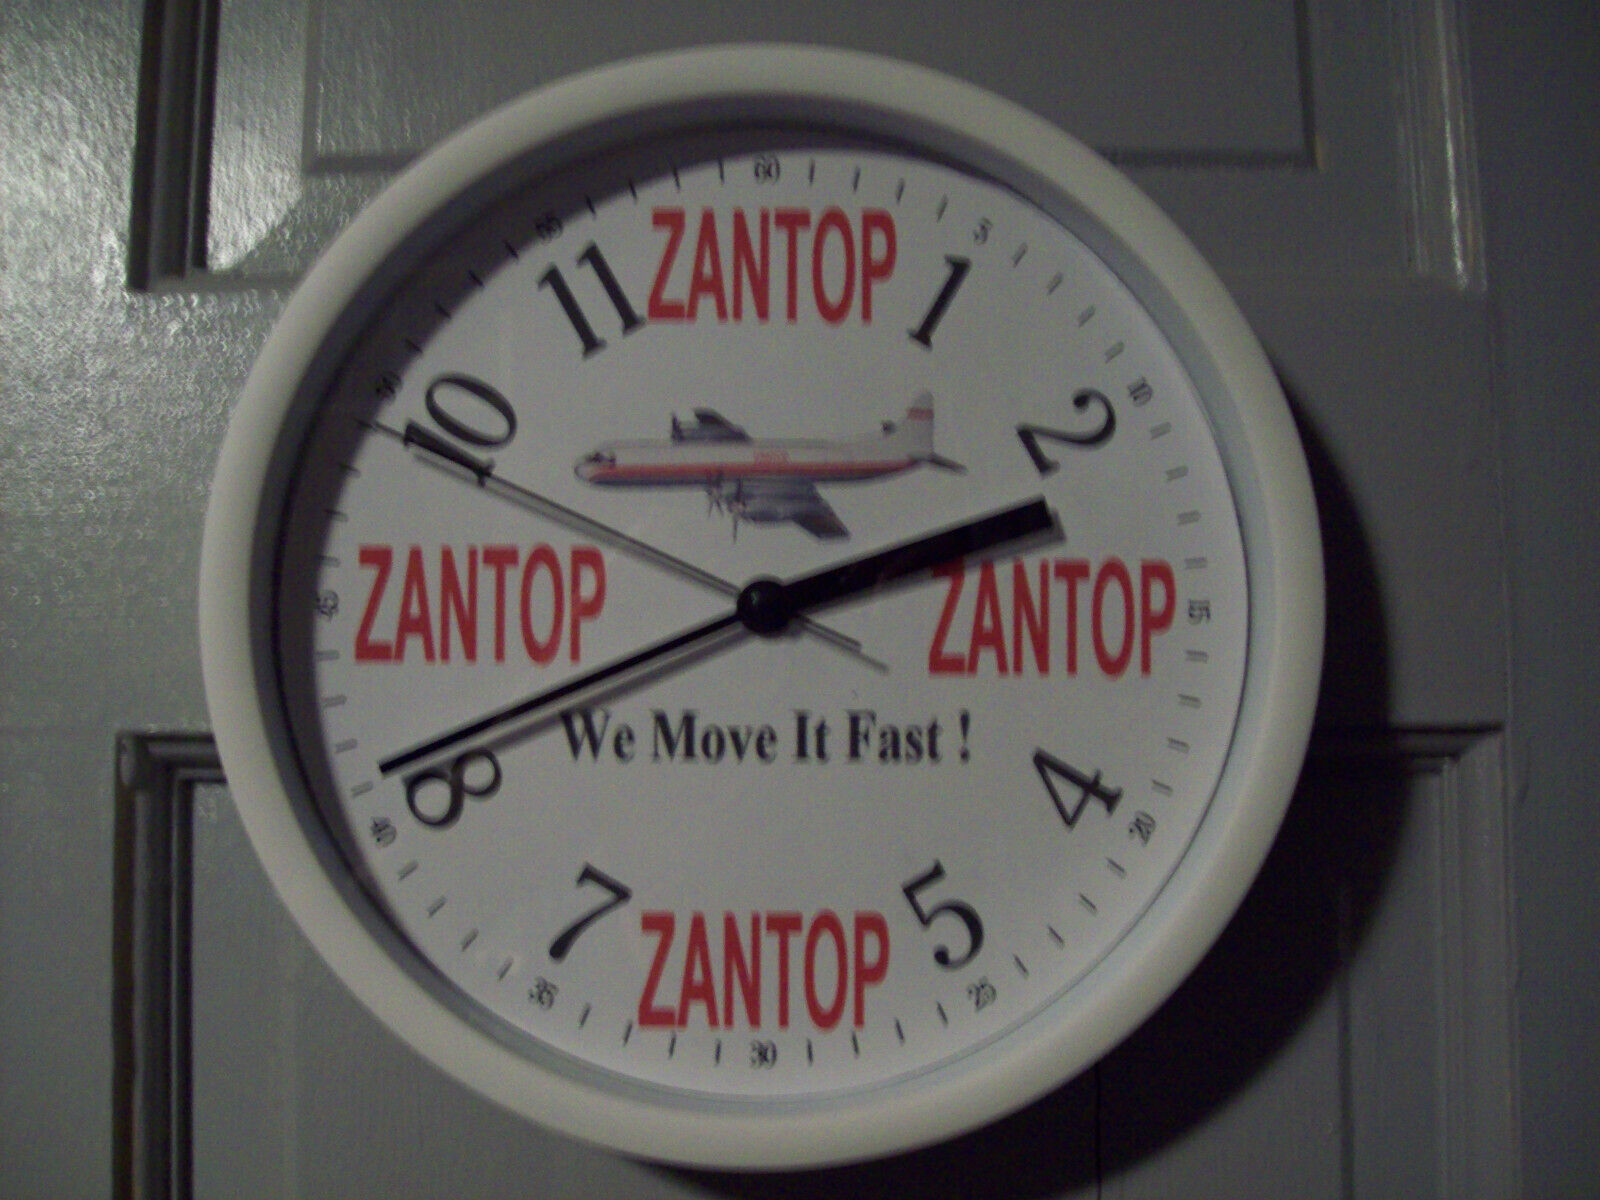 ZANTOP INTERNATIONAL L-188 WALL  CLOCK  UPS  DHL  FEDEX  FLYING TIGERS  ATLAS